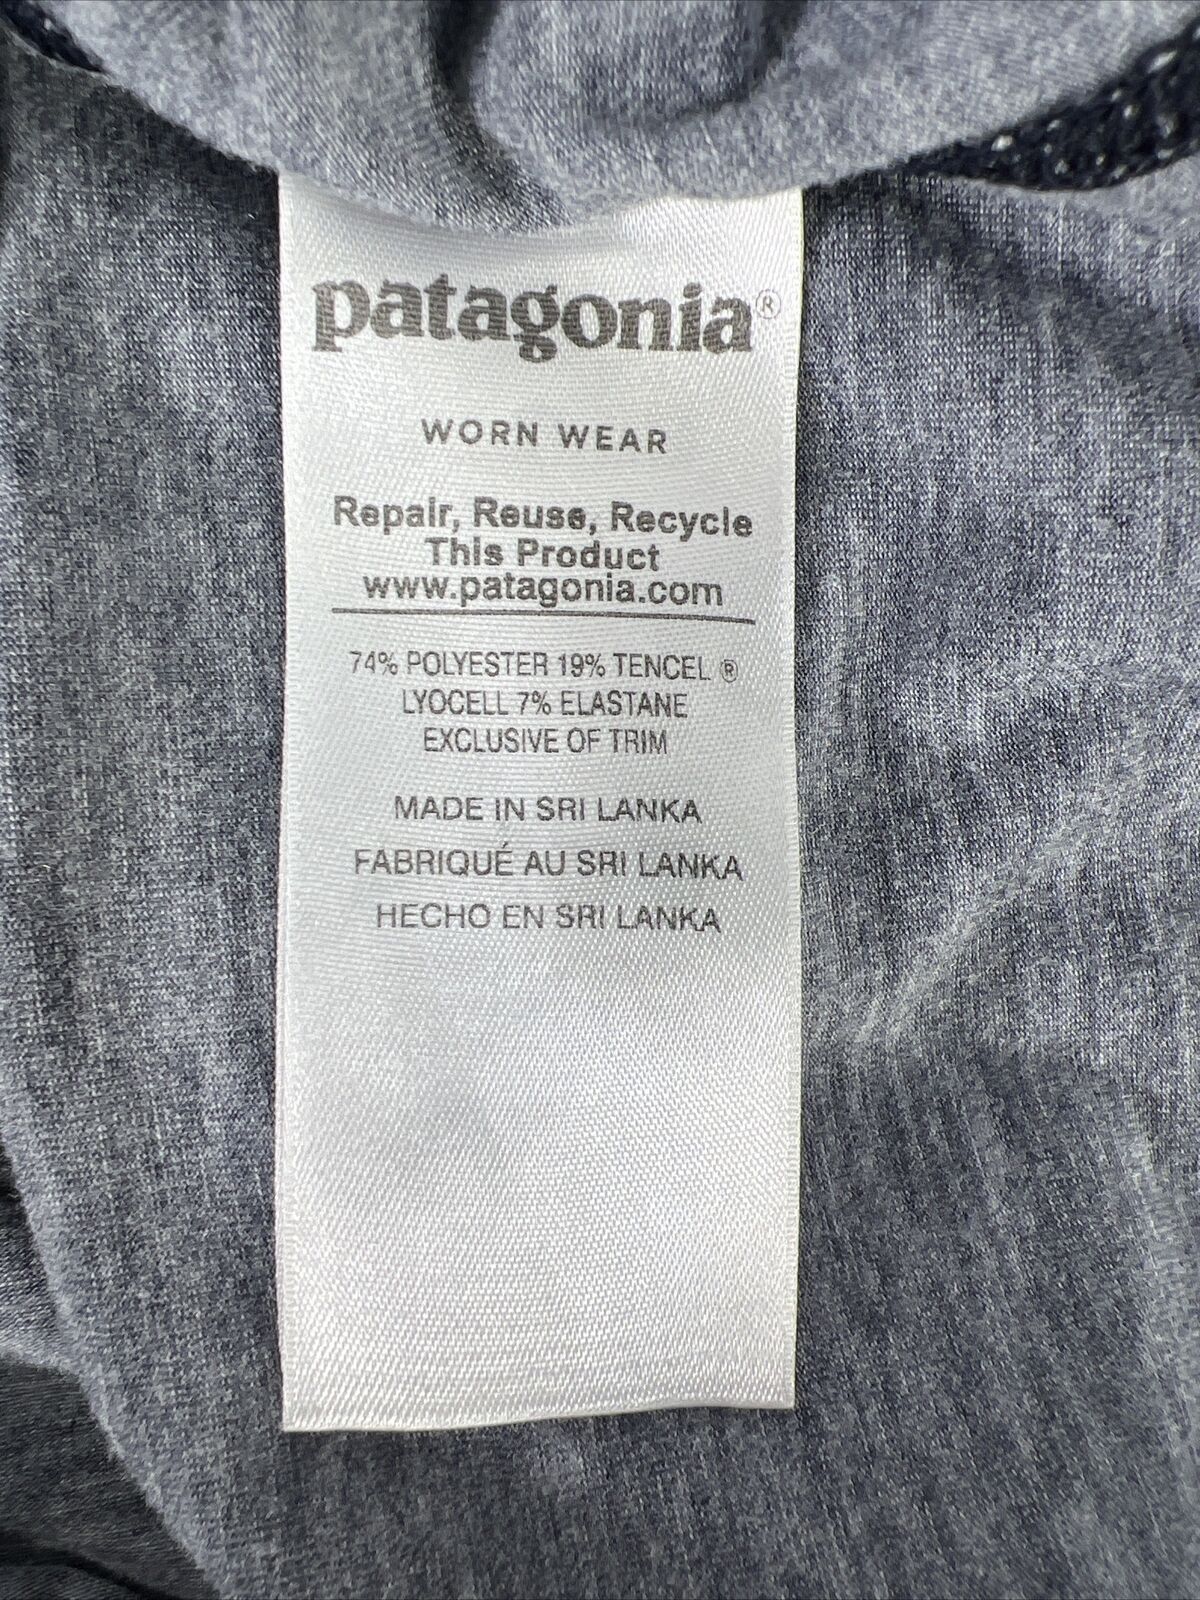 Camiseta Patagonia de manga corta aleteo azul/gris para mujer - S